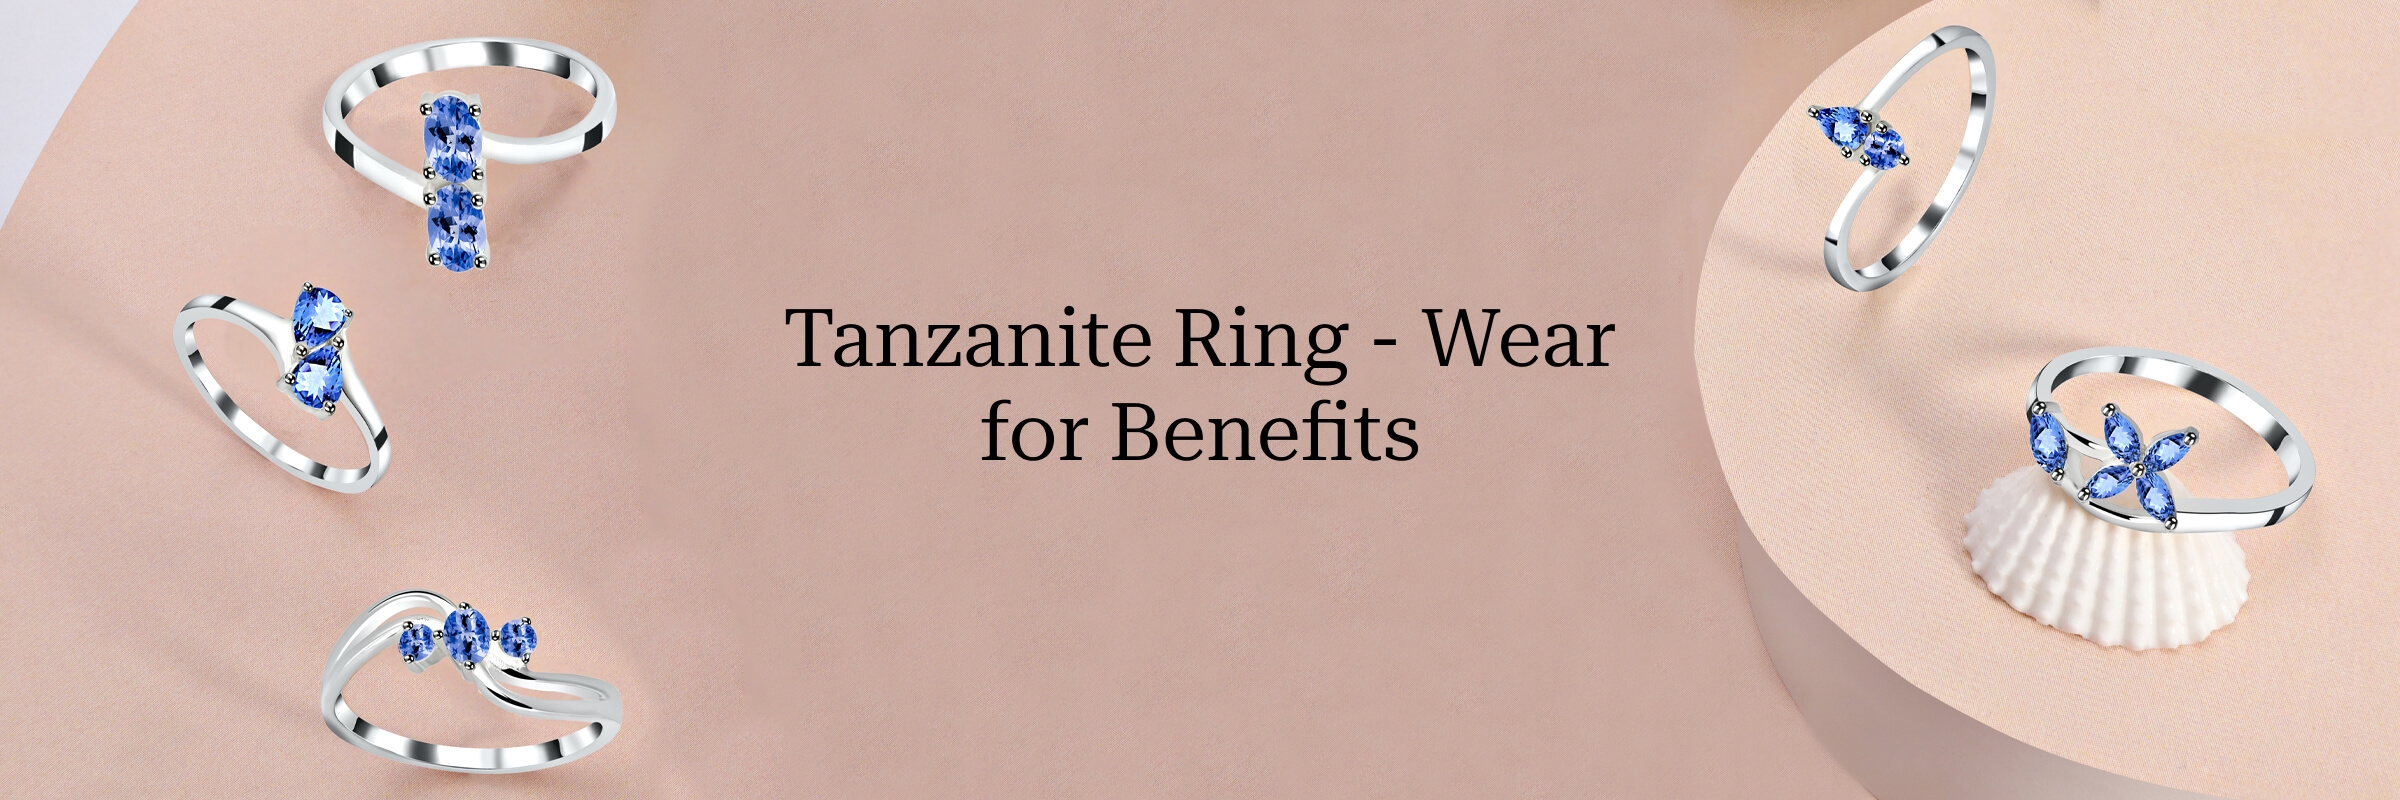 Benefits of wearing the Tanzanite ring